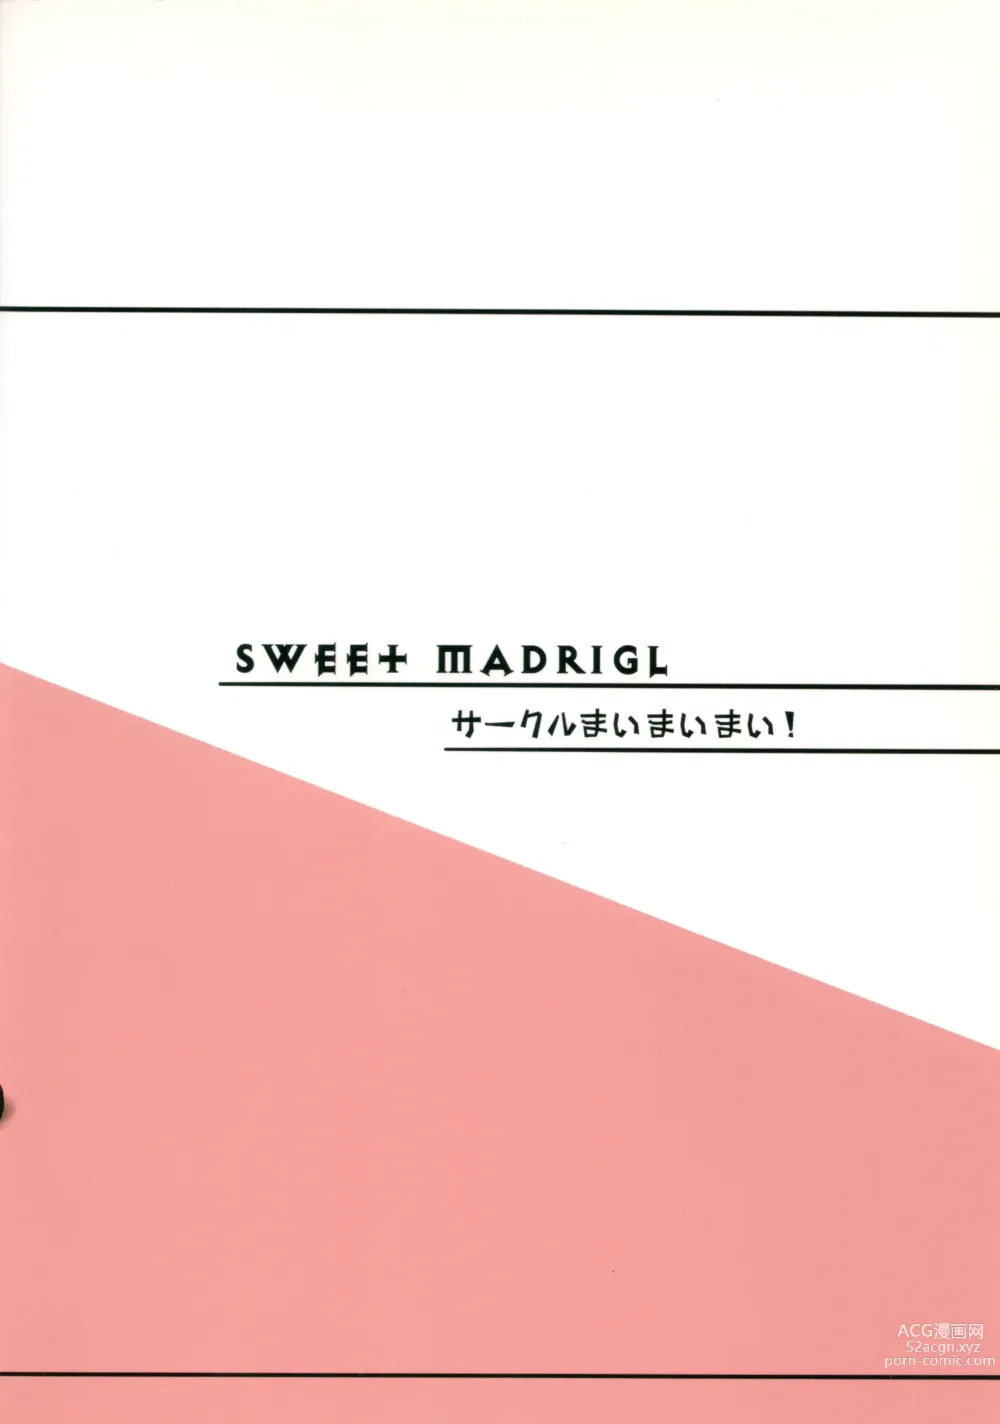 Page 34 of doujinshi Sweet Madrigal